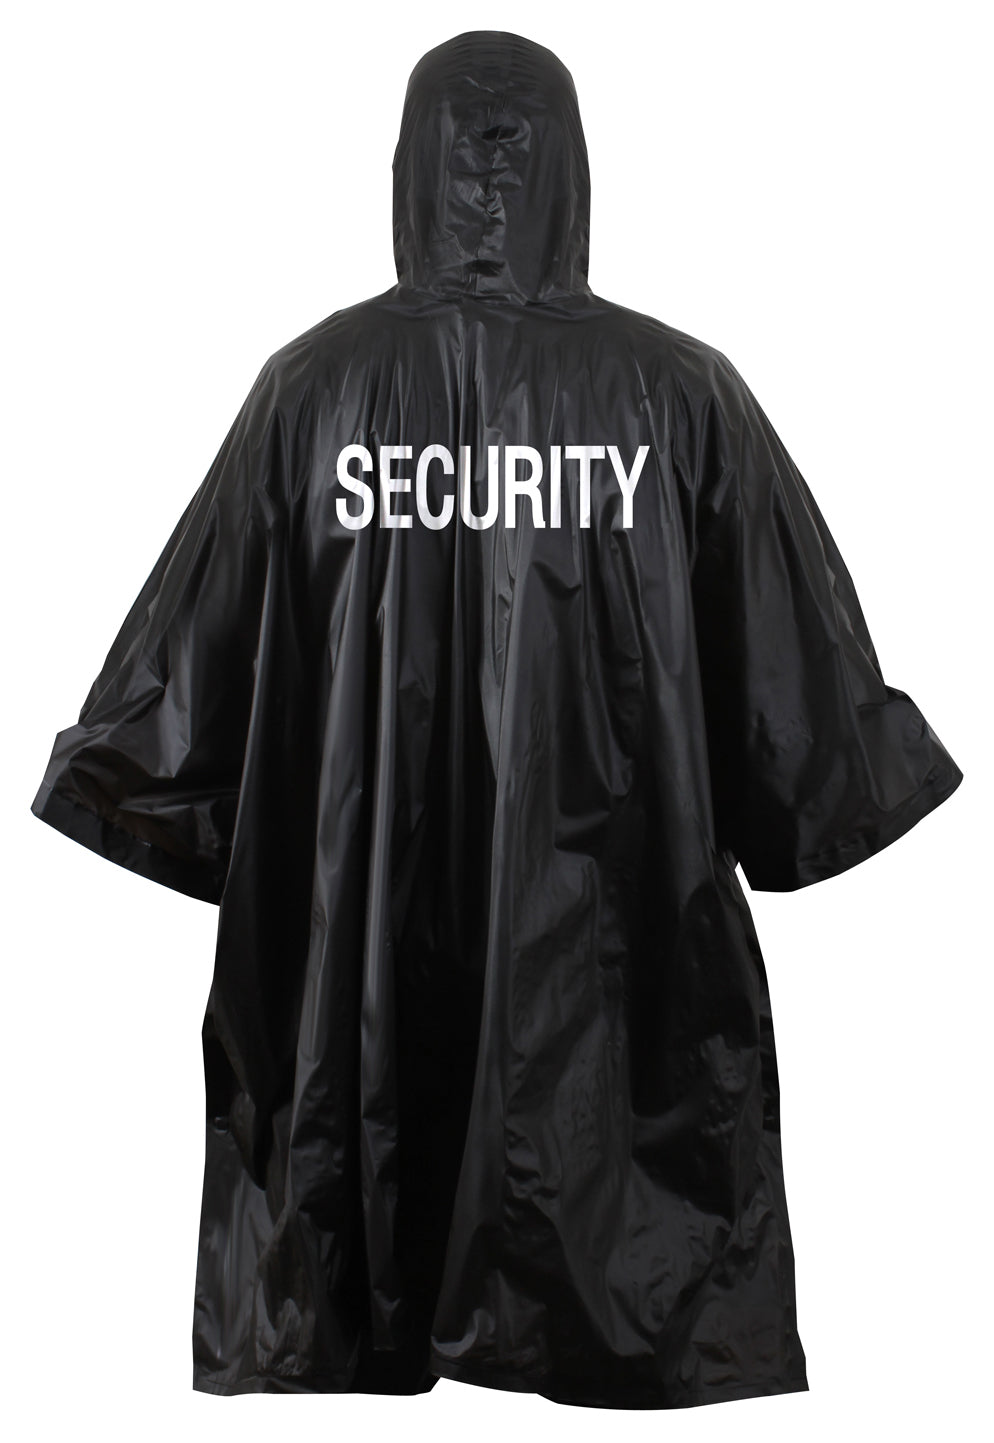 [Public Safety] Vinyl Security Rain Ponchos